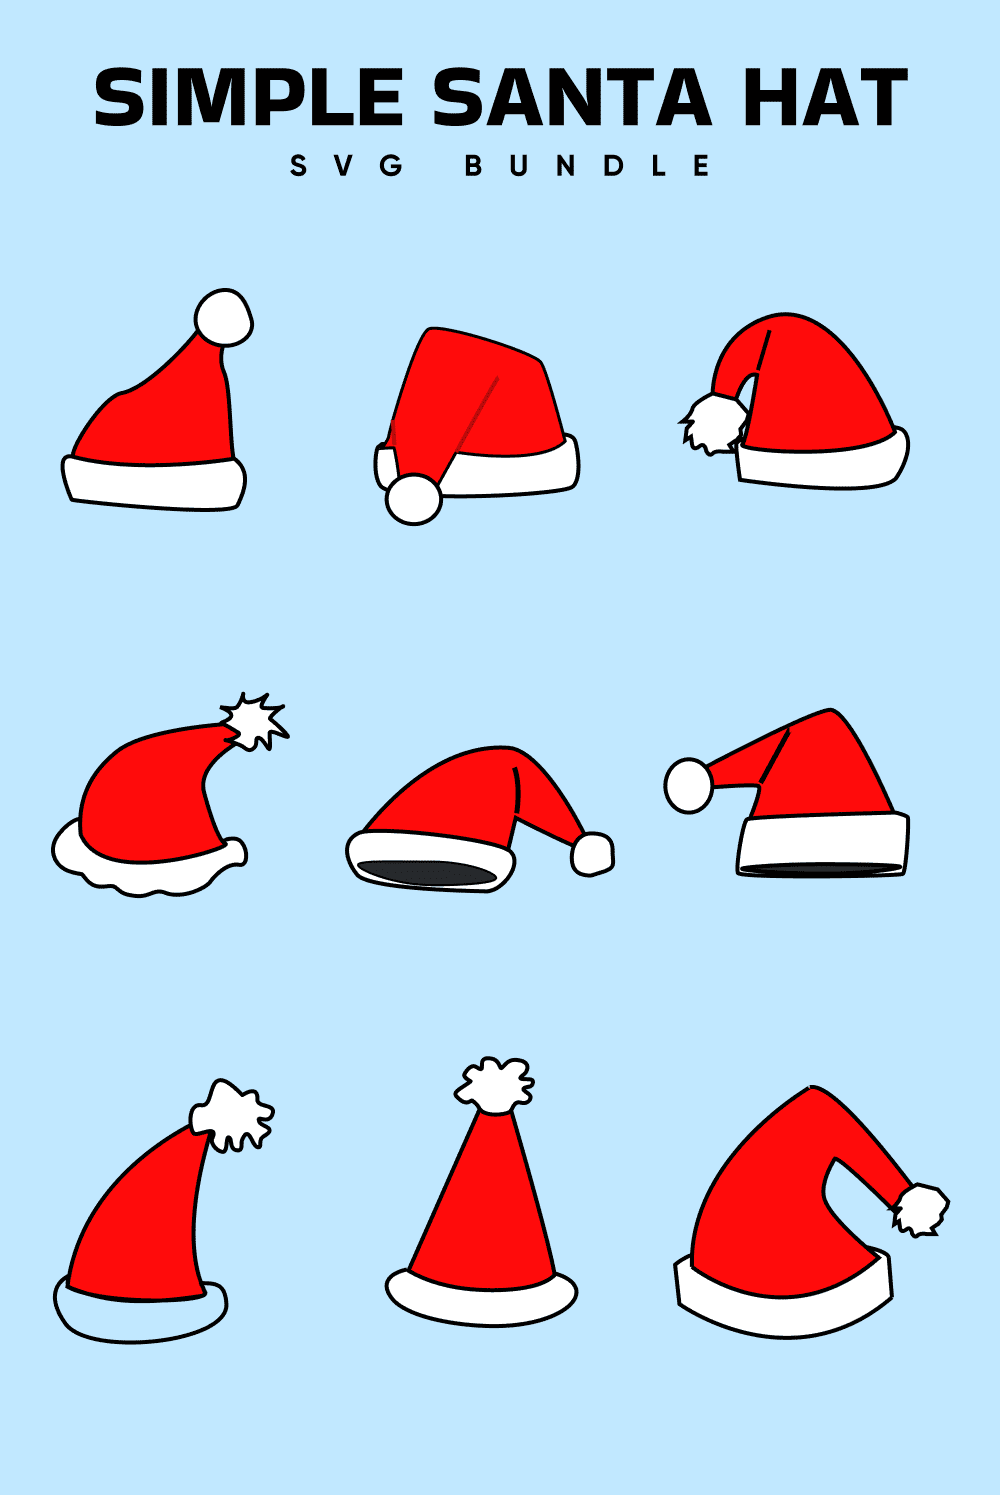 Simple Santa hat SVG bundle.